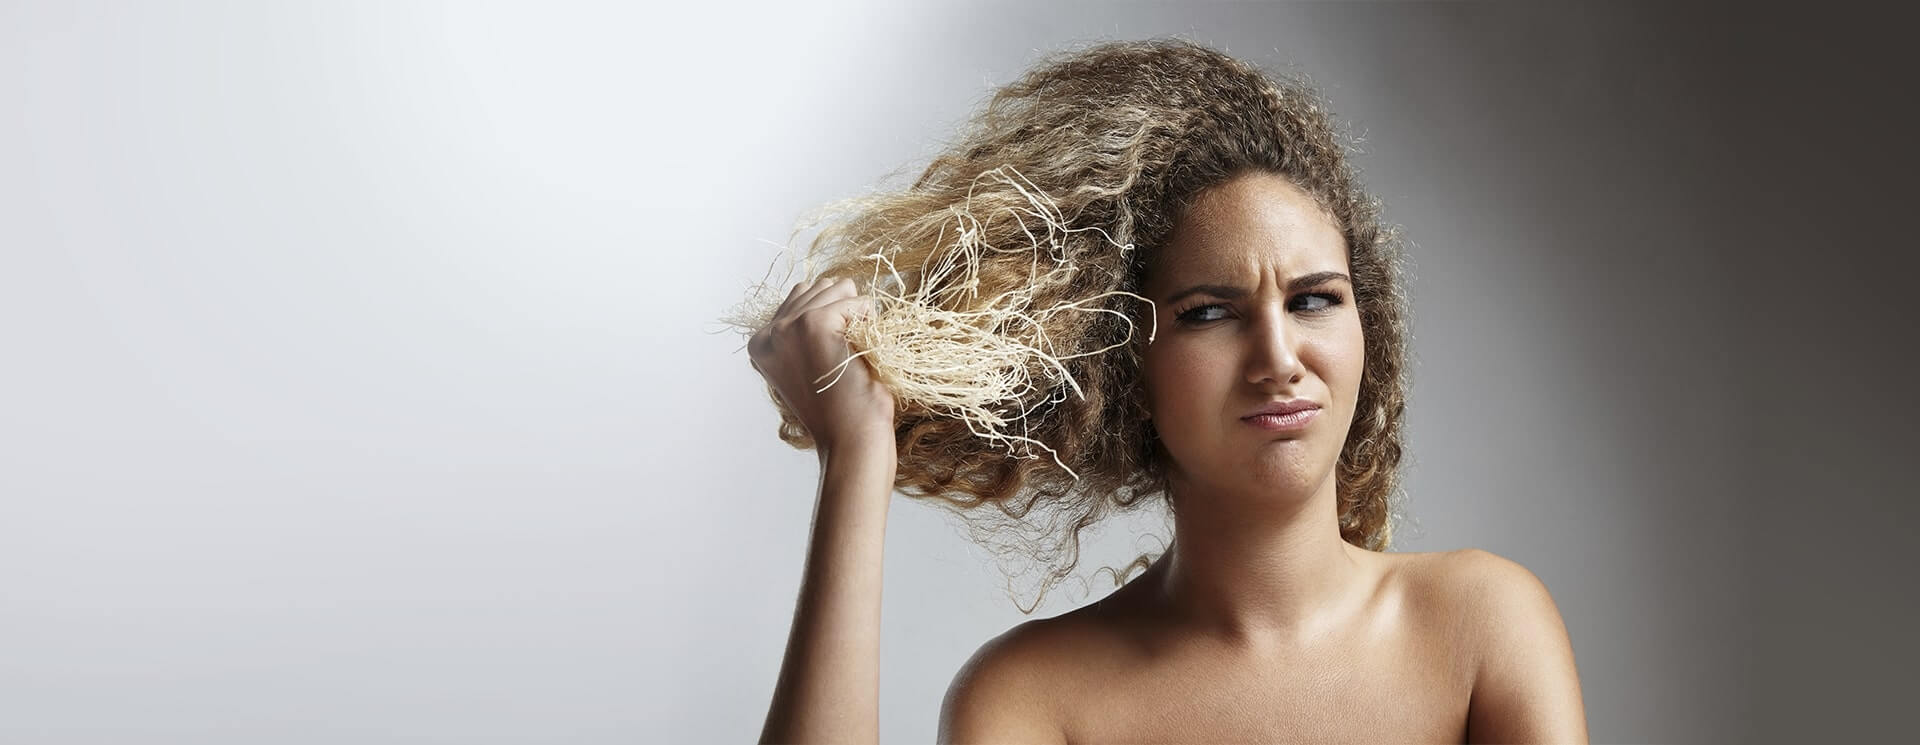 What causes dry hair? | Pantene